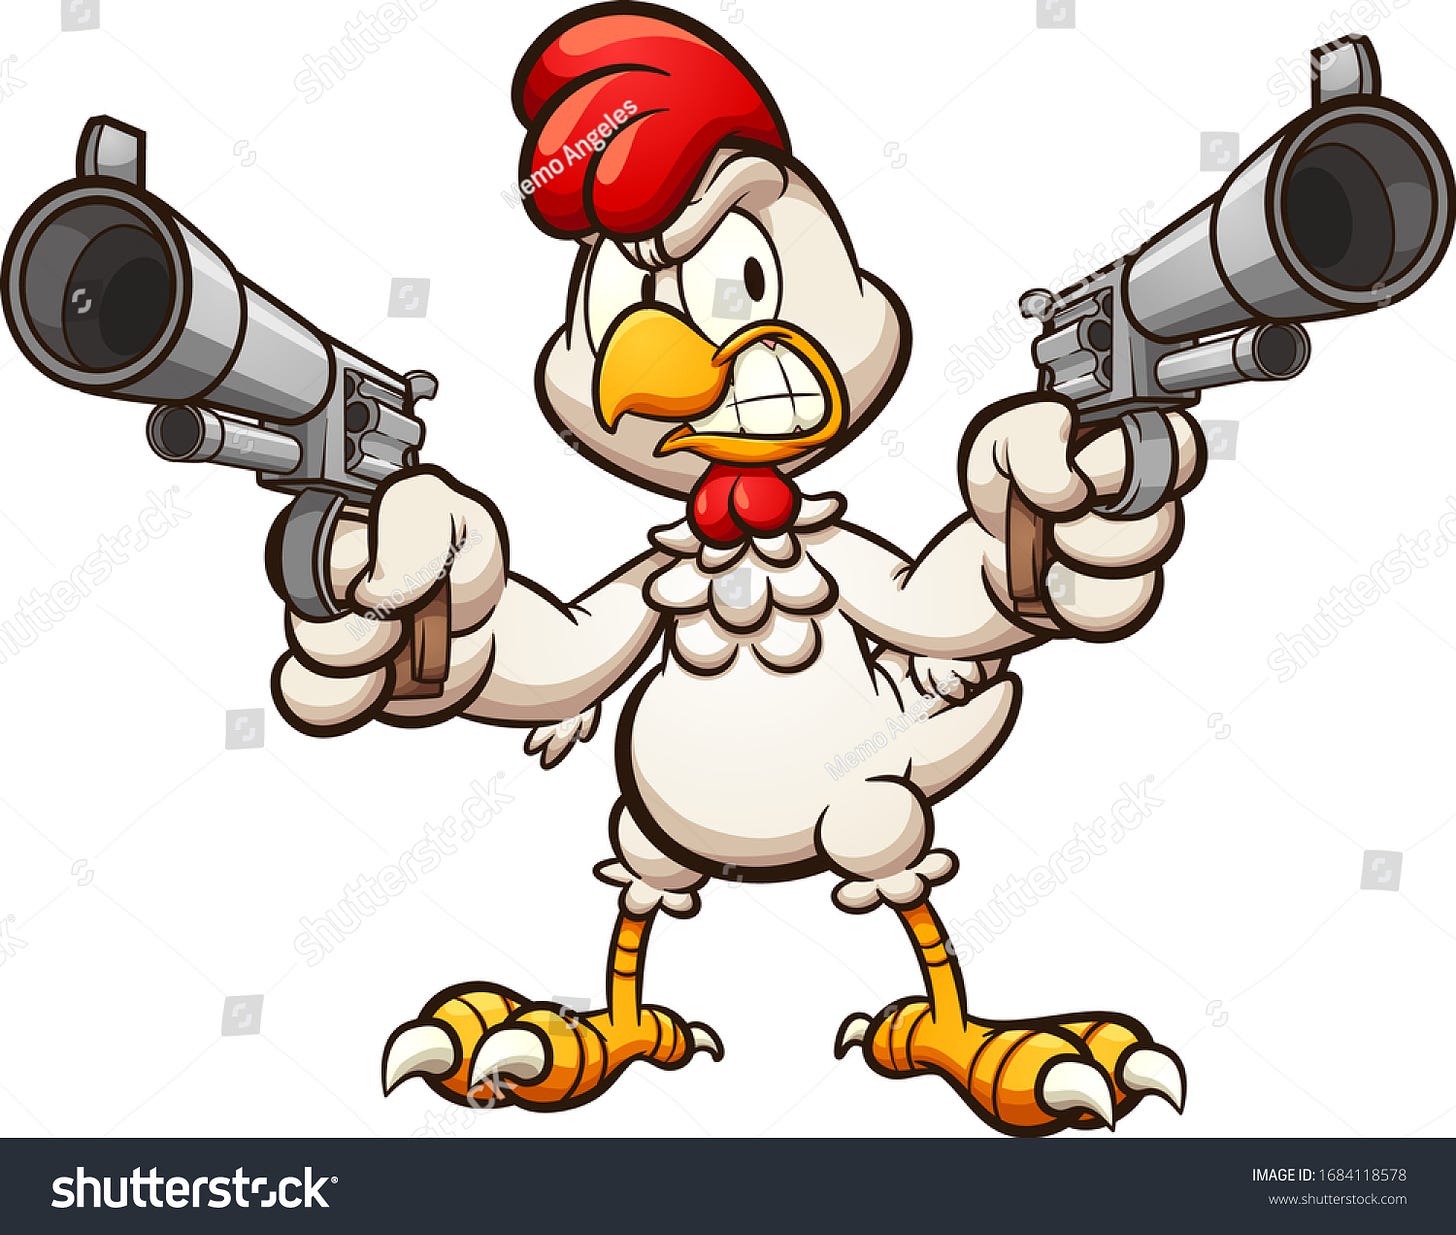 Chicken with a gun Images, Stock Photos & Vectors | Shutterstock